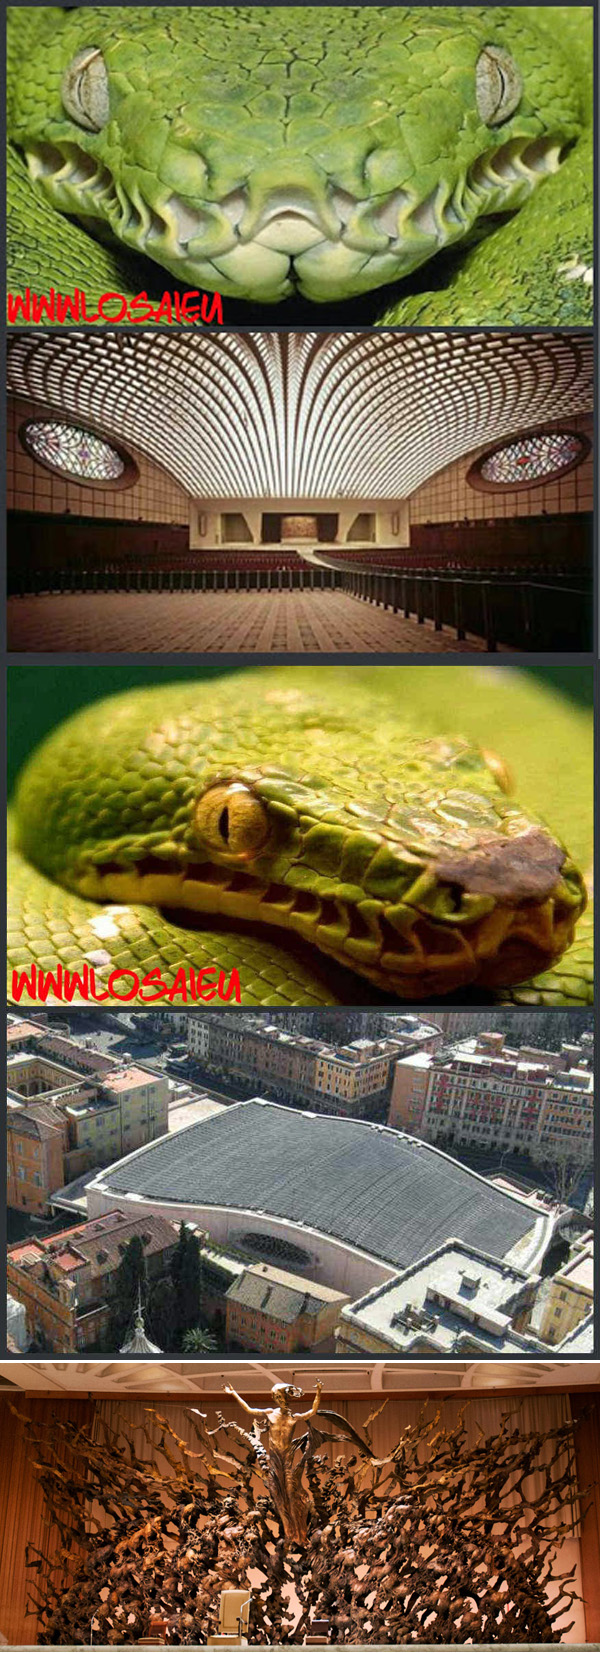 Paul VI Hall - Serpent - 02